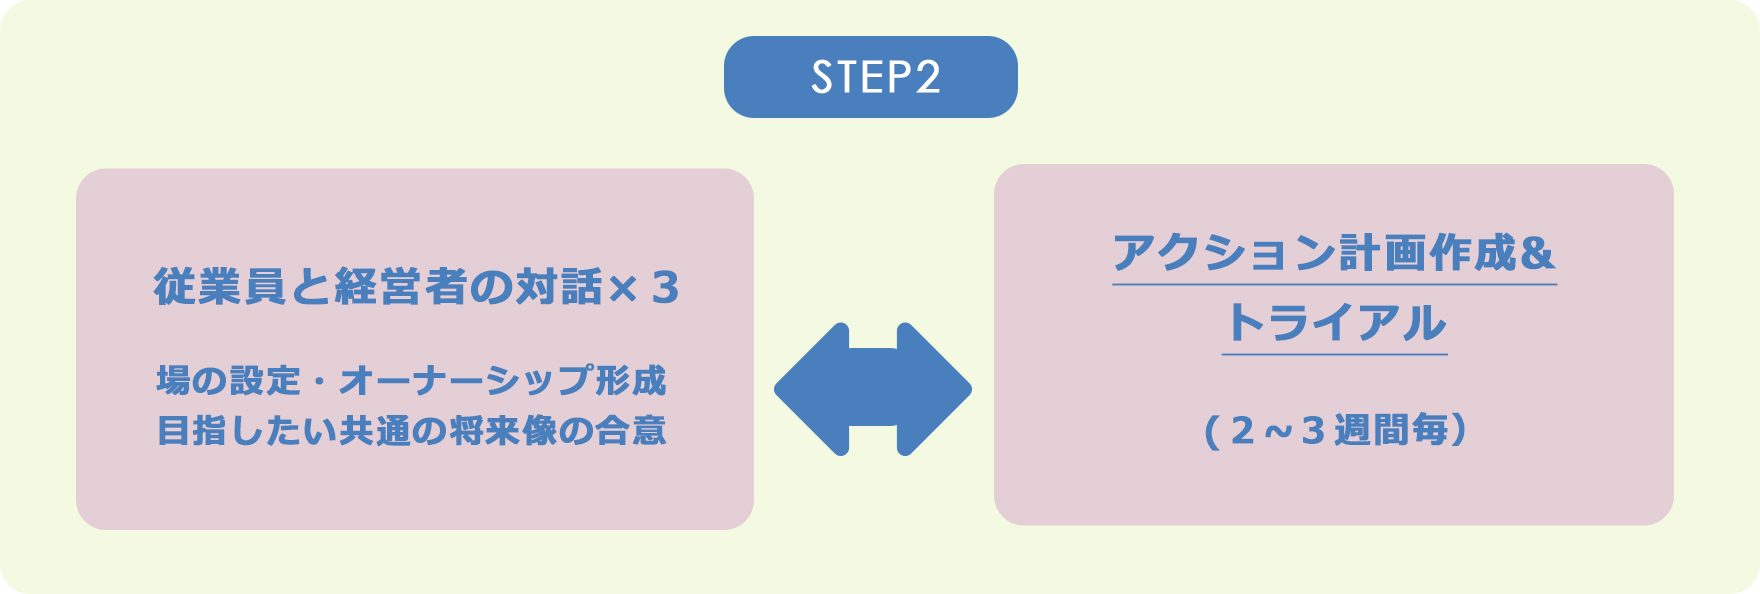 step2：従業員と経営者の対話×3からアクション計画作成&トライアル